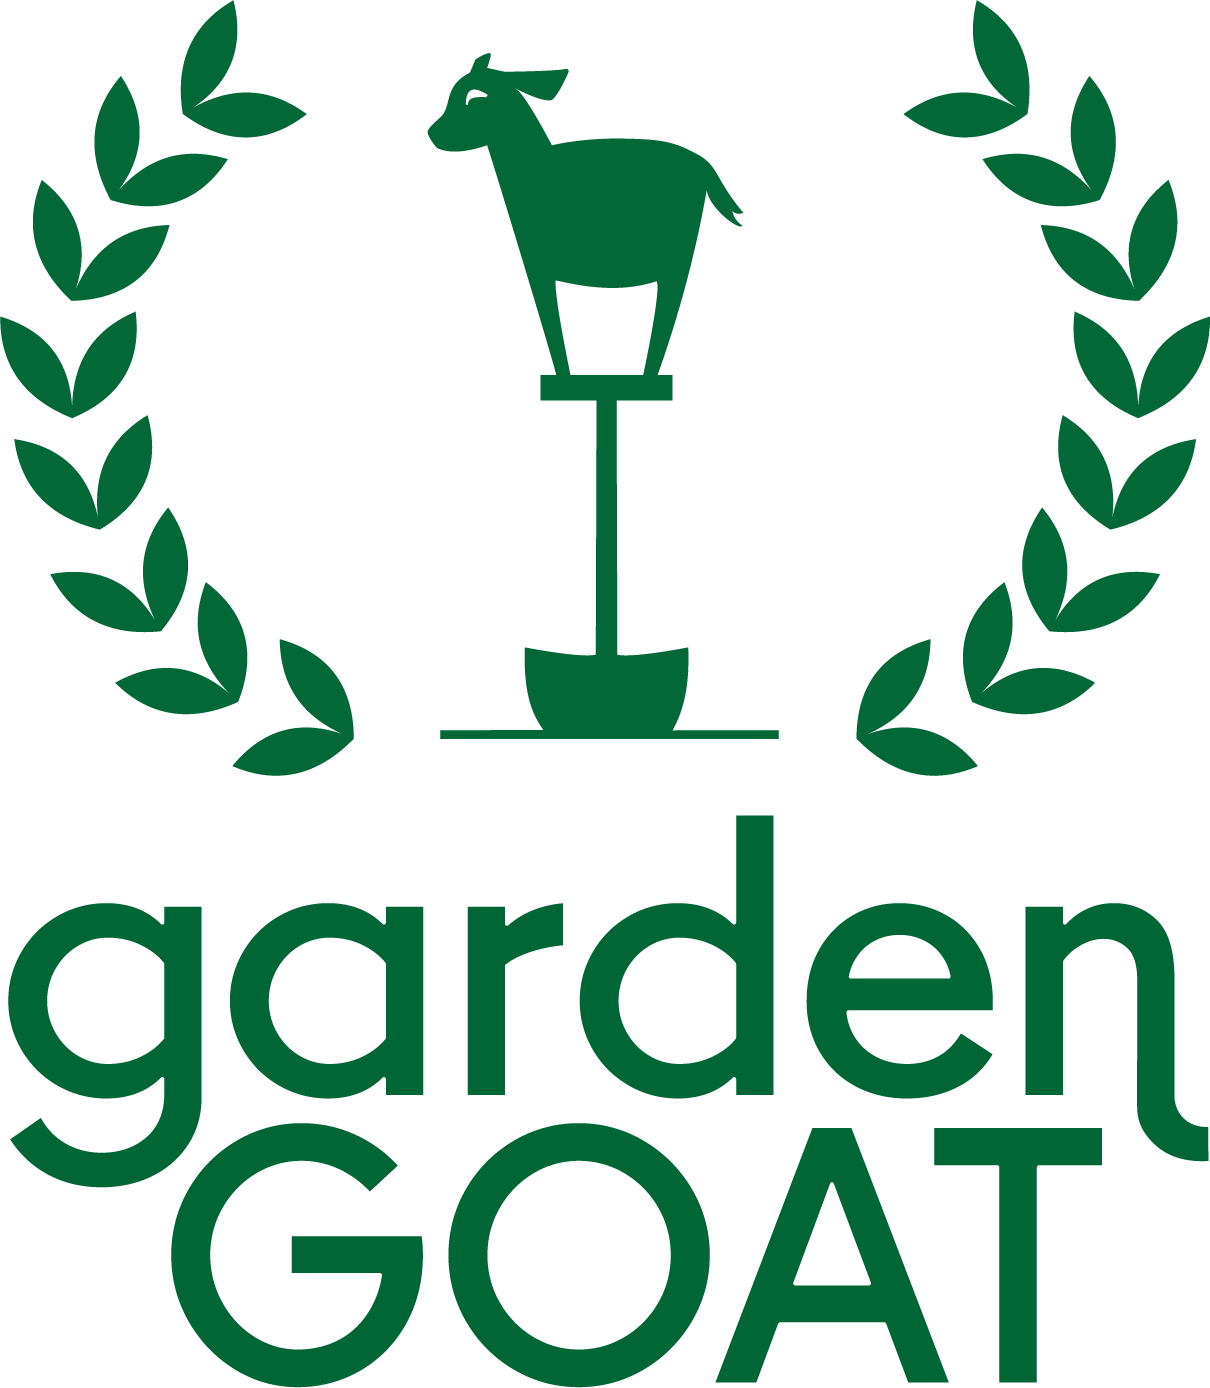 Garden Goat LLC Logo